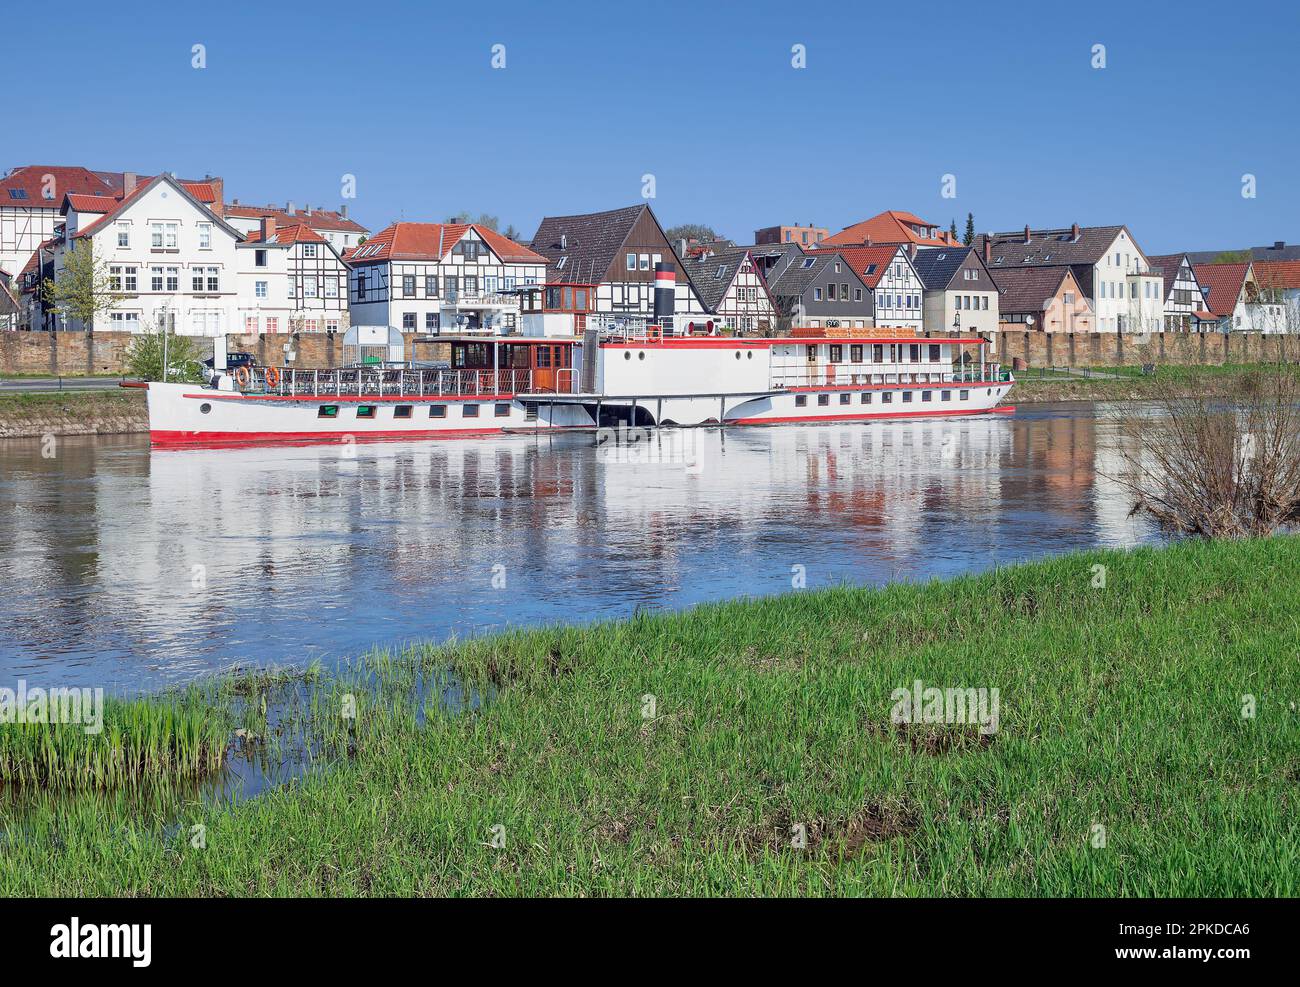 Minden à Weser River, région de Weserbergland, Allemagne Banque D'Images